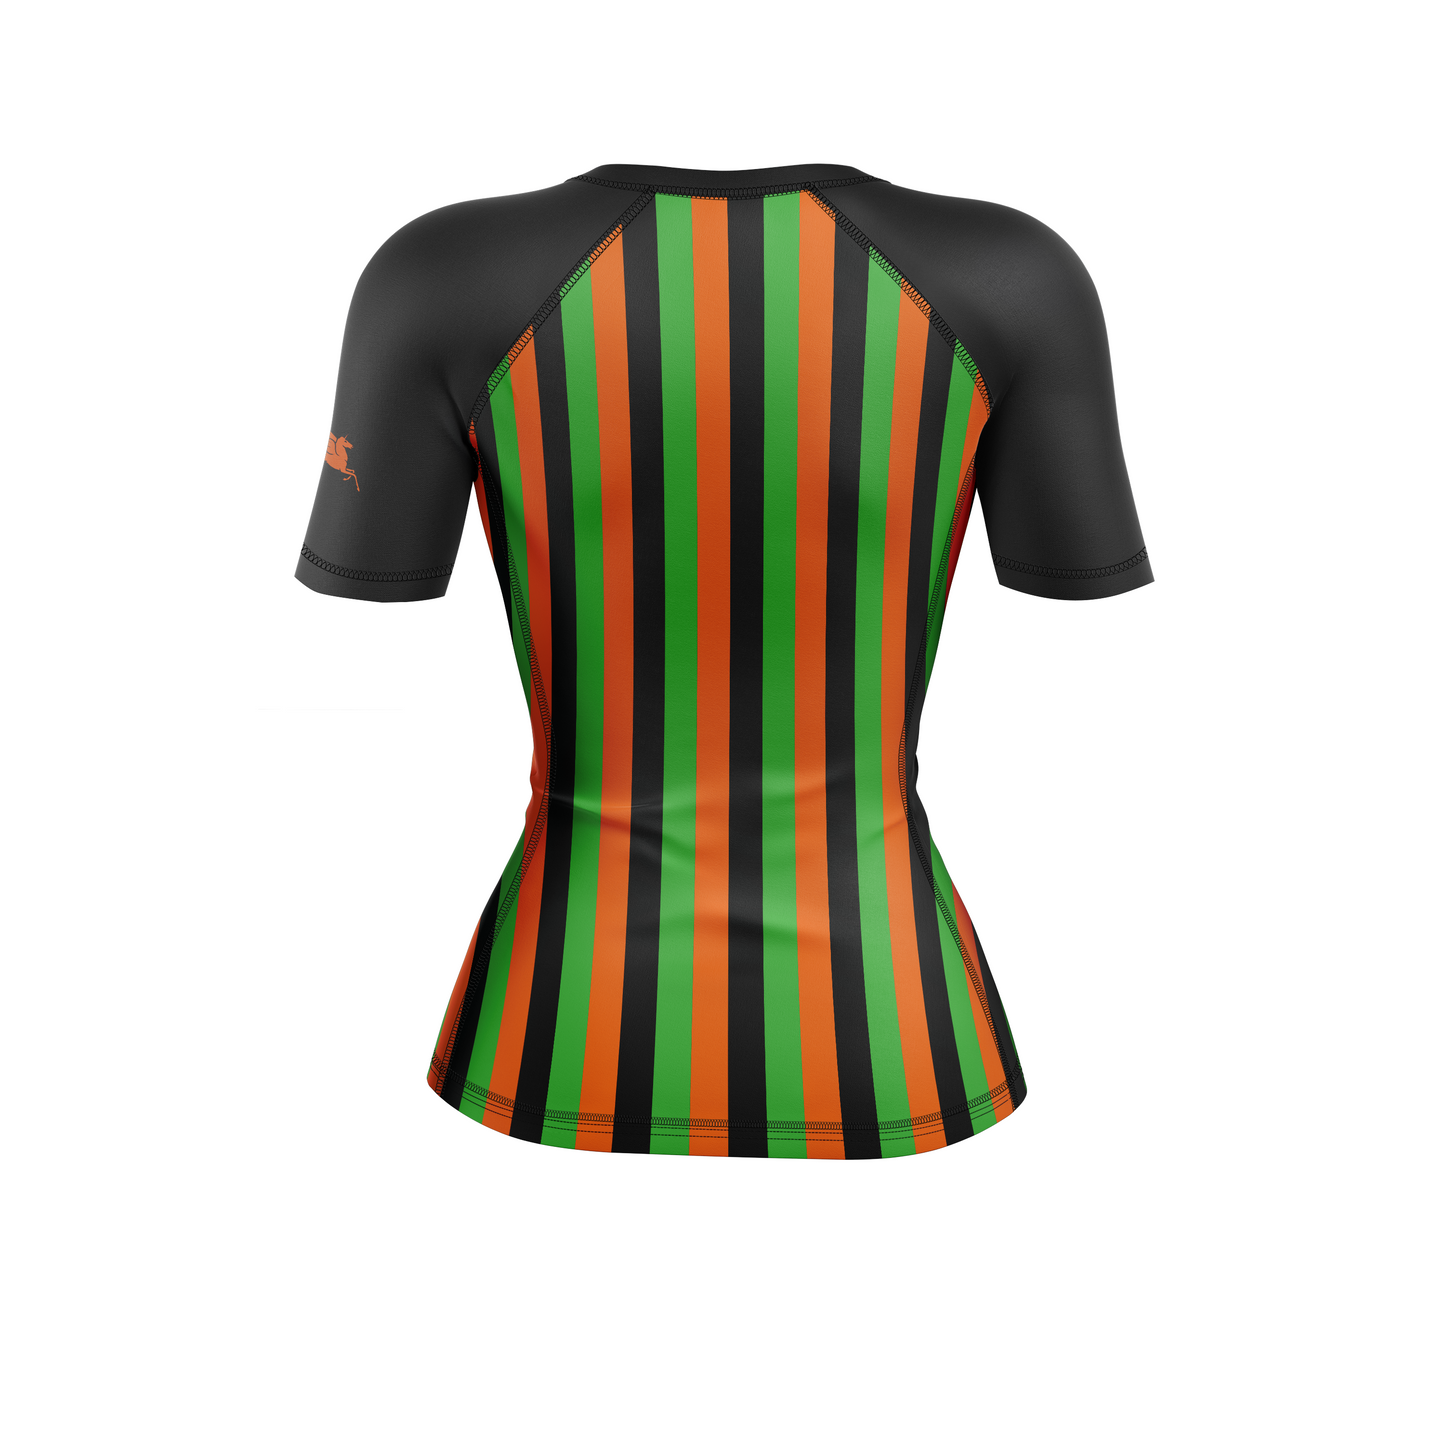 CCFC Golciaga United women's rash guard, black/orange/green